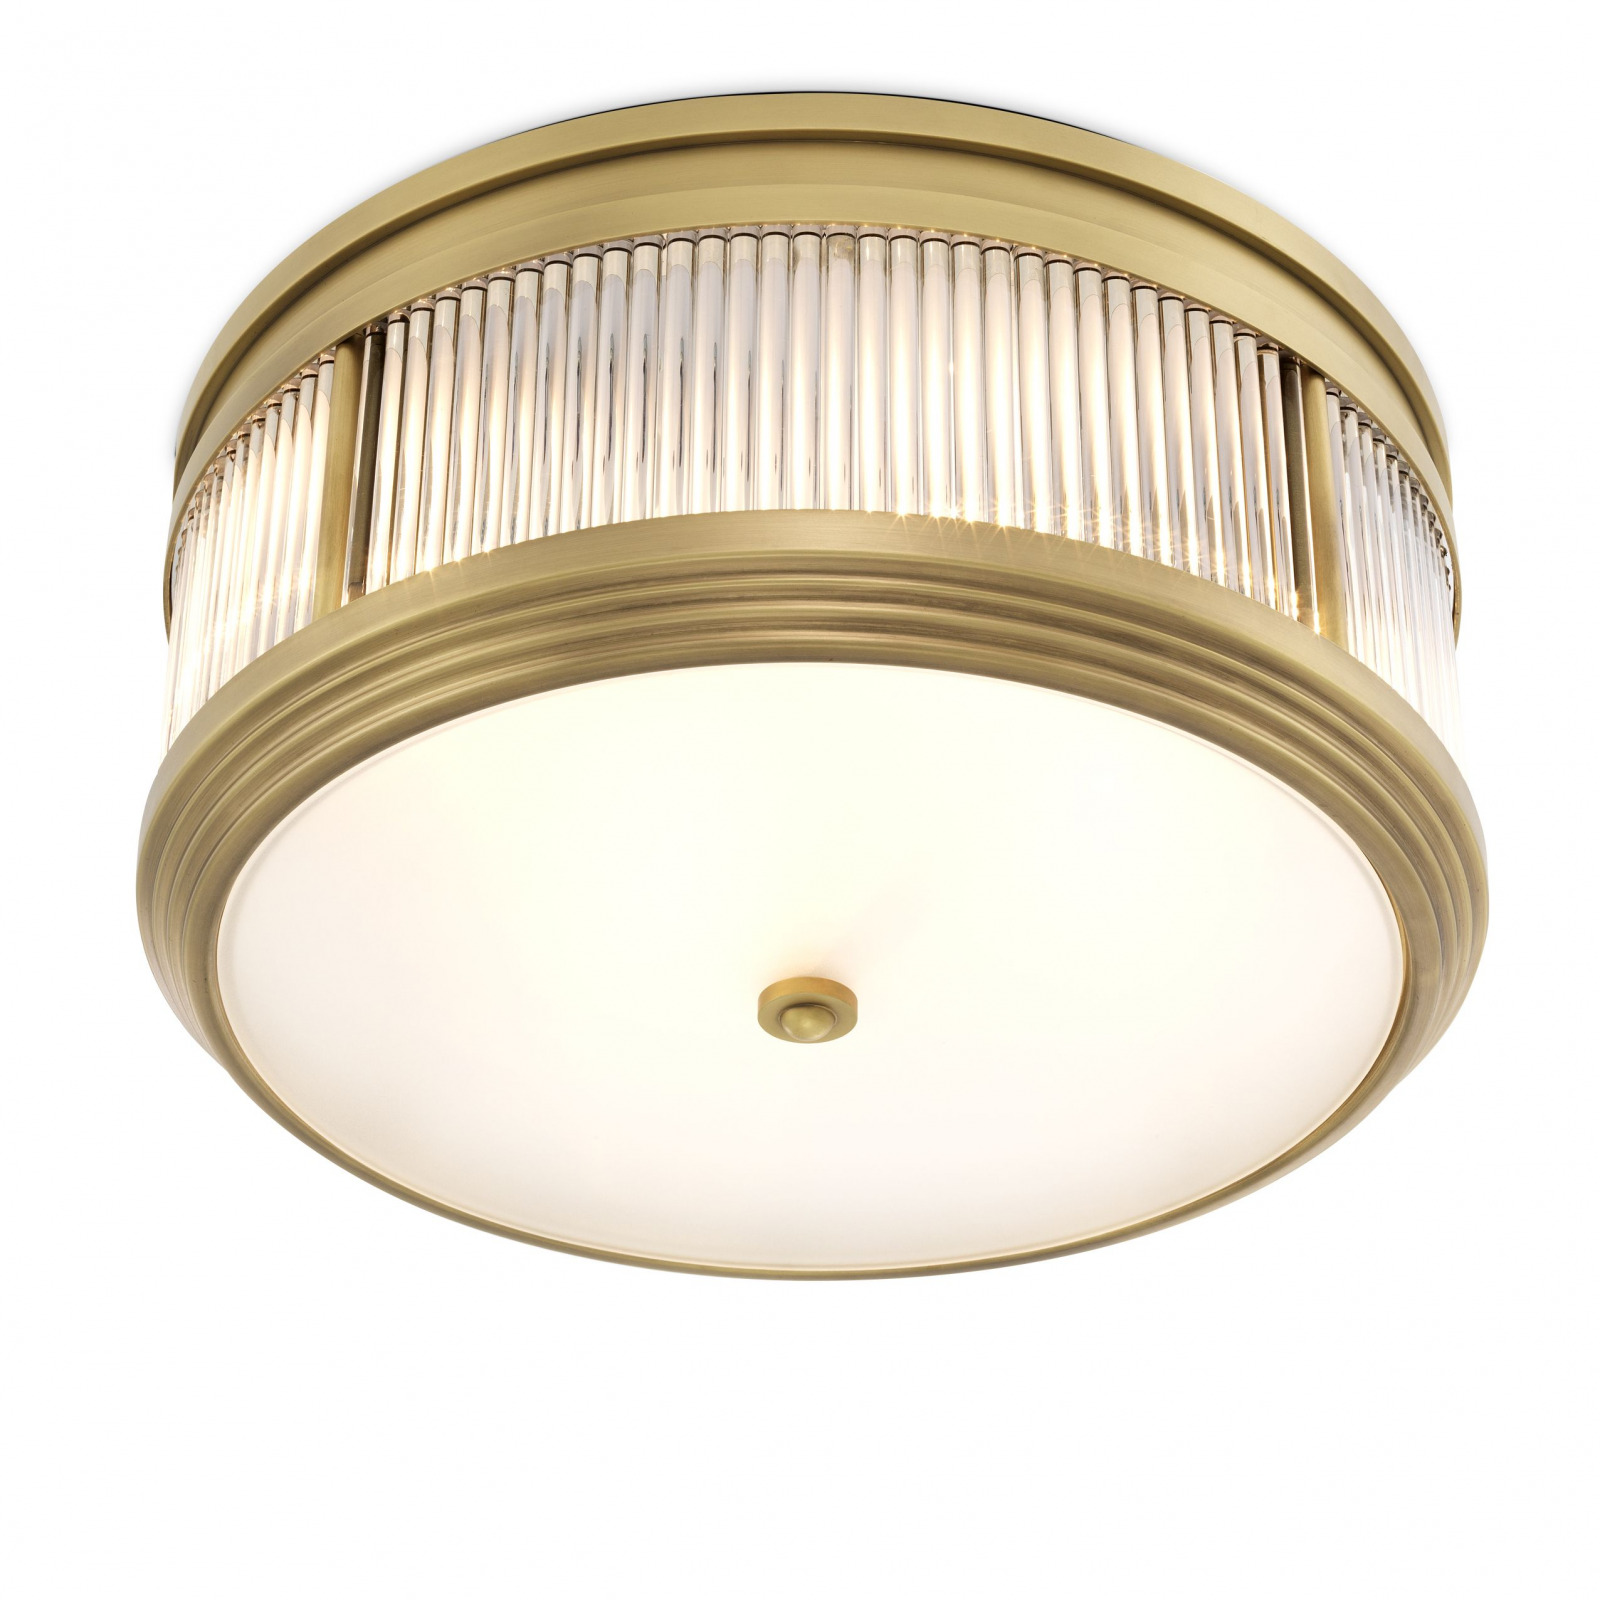 Rousseau brass ceiling lamp